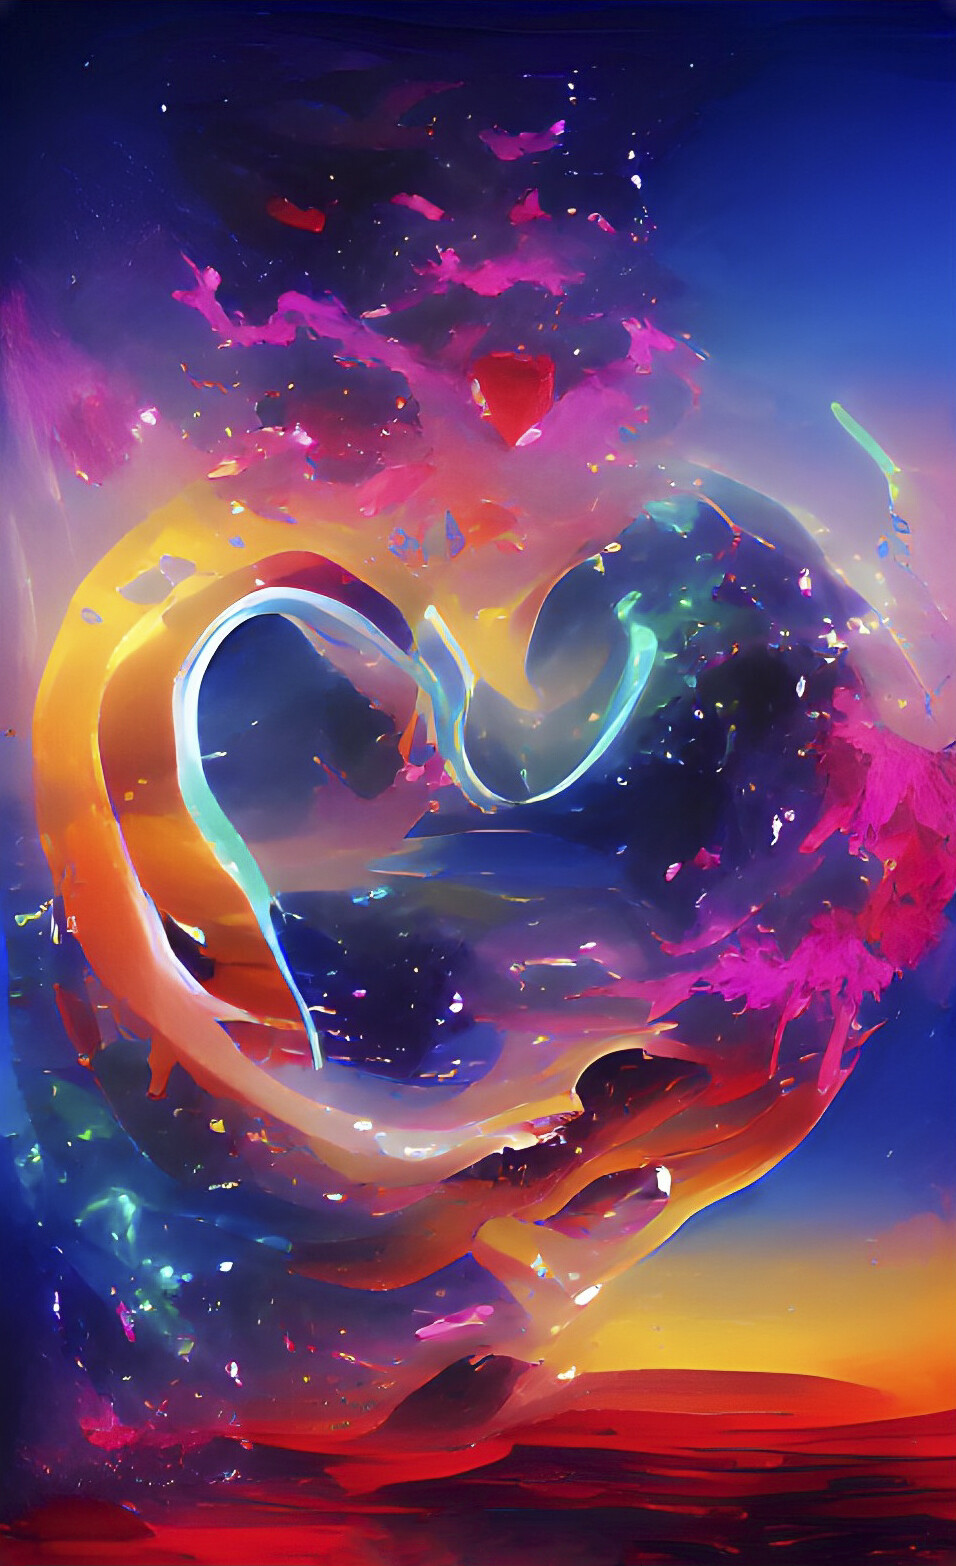 ArtStation - Infinity Love